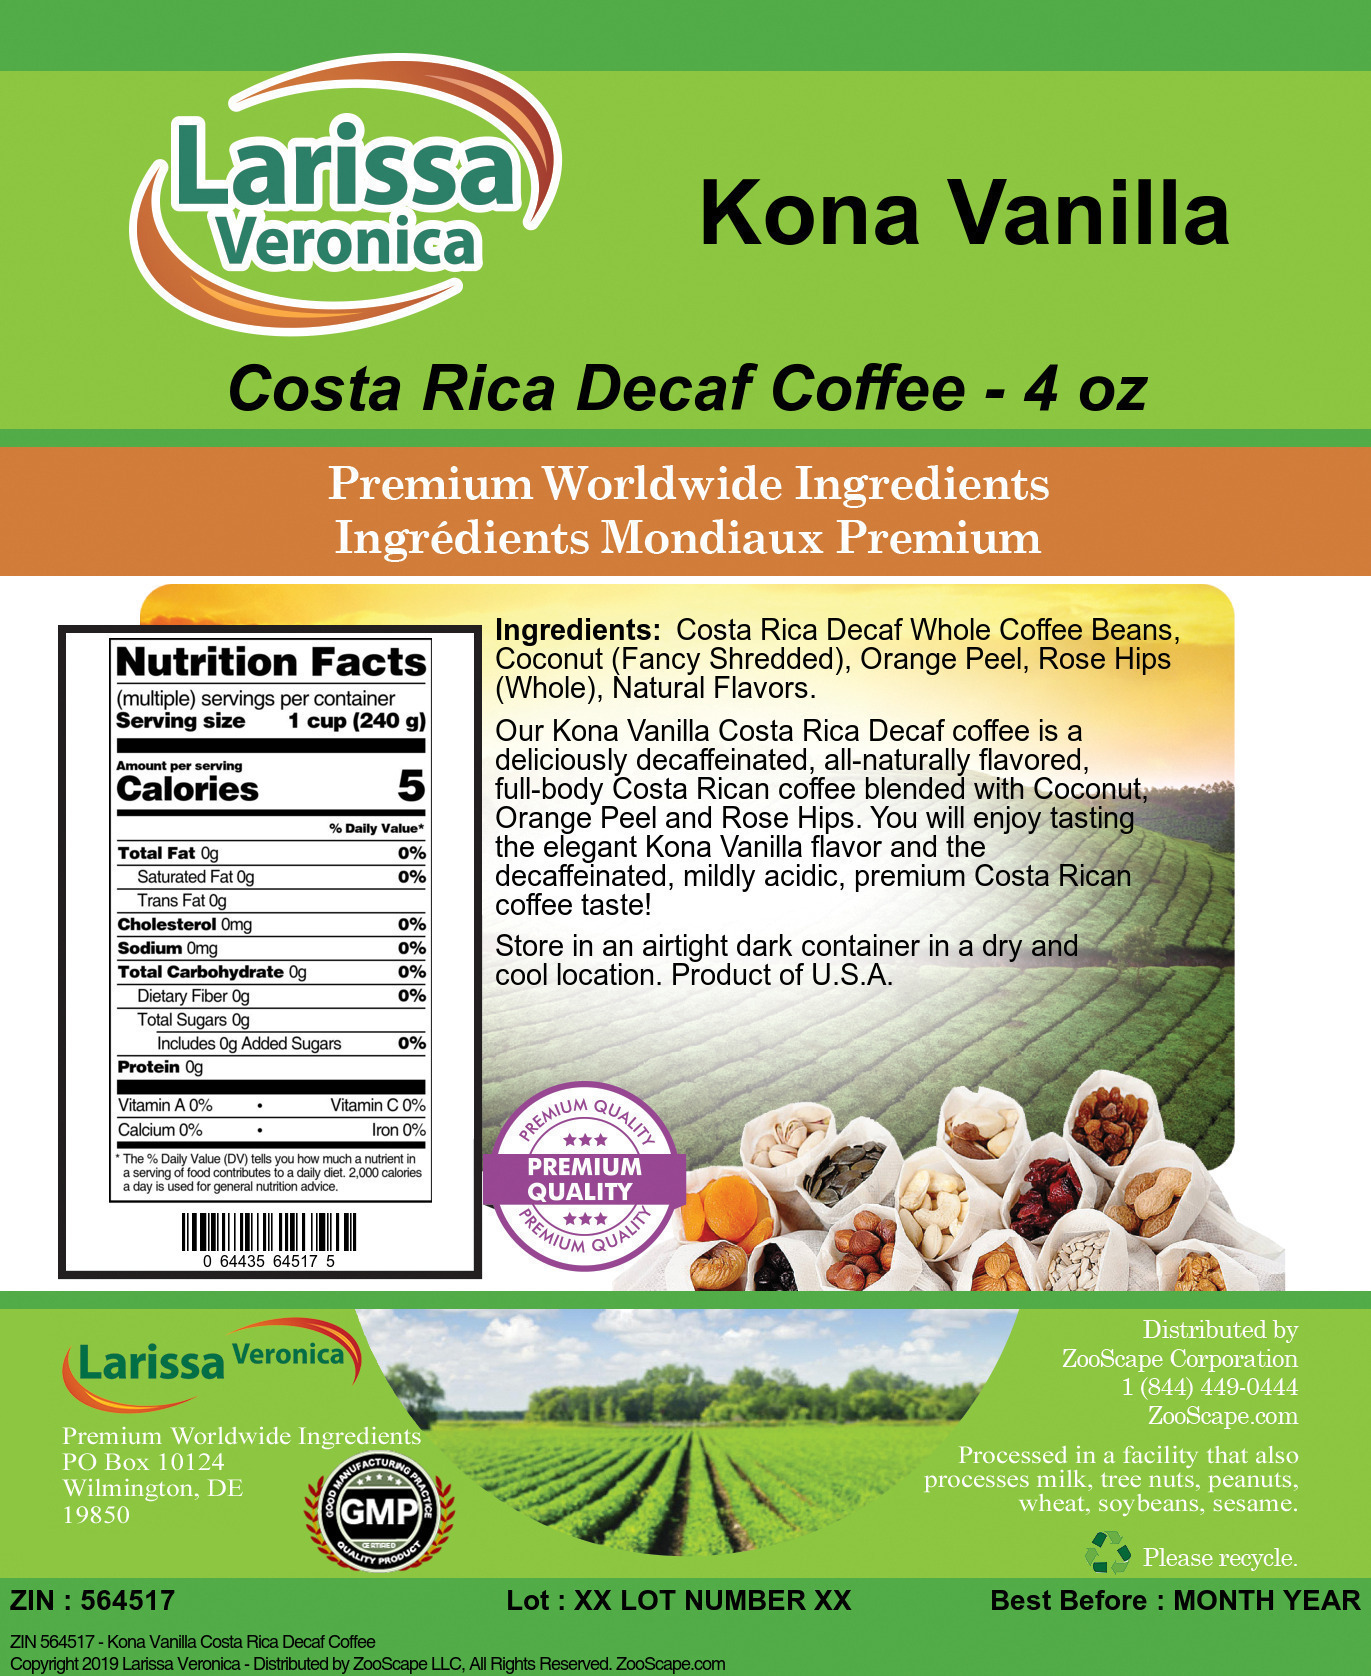 Kona Vanilla Costa Rica Decaf Coffee - Label